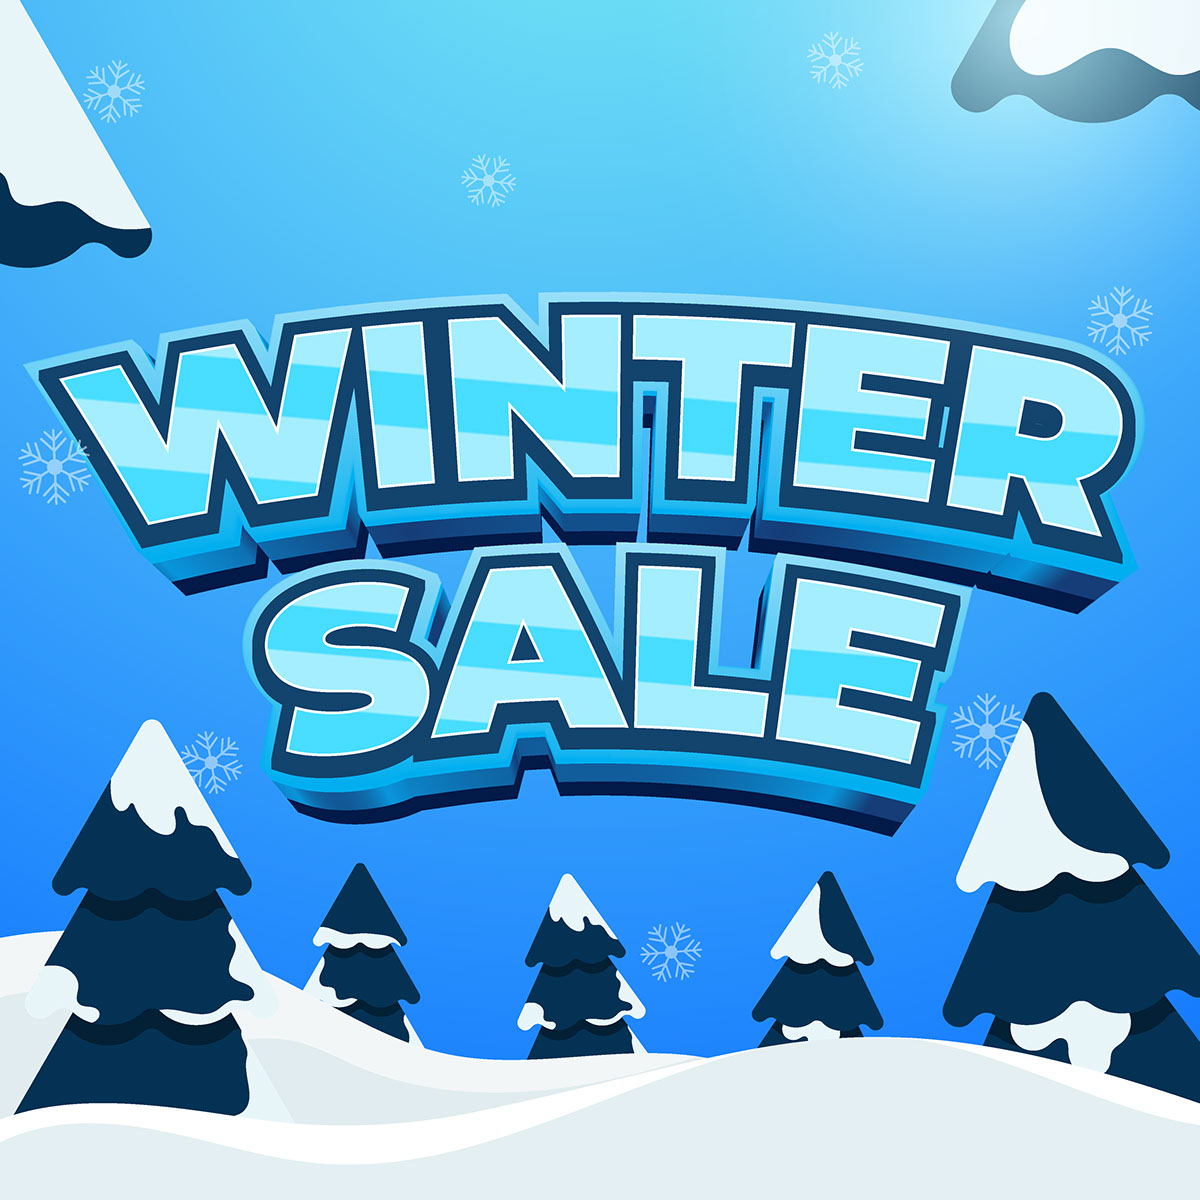 Winter Sale rendition image